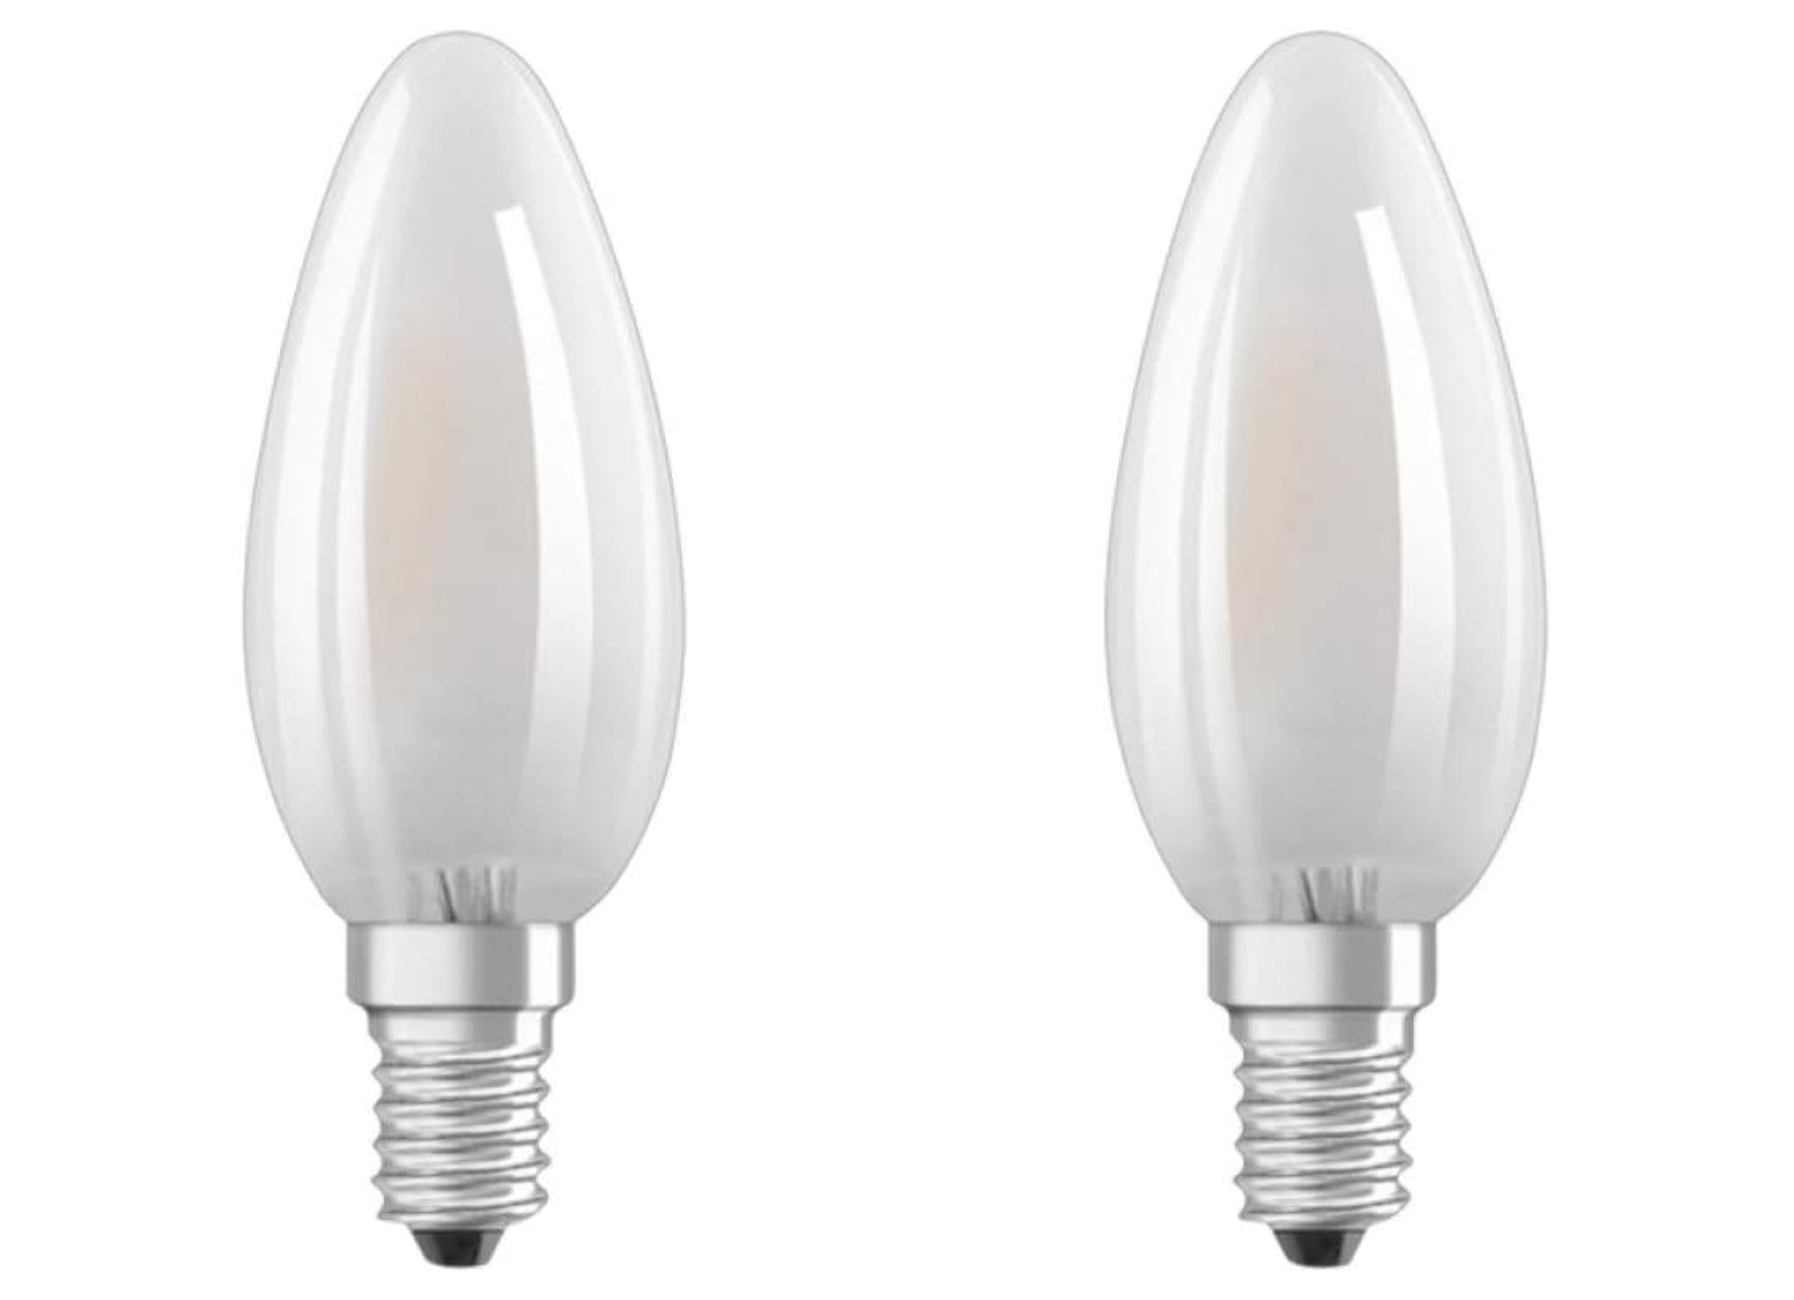 Osram Led Retrofit Classic B - electricite - eclairage - ampoules - ampoules  led - osram led retrofit classic b